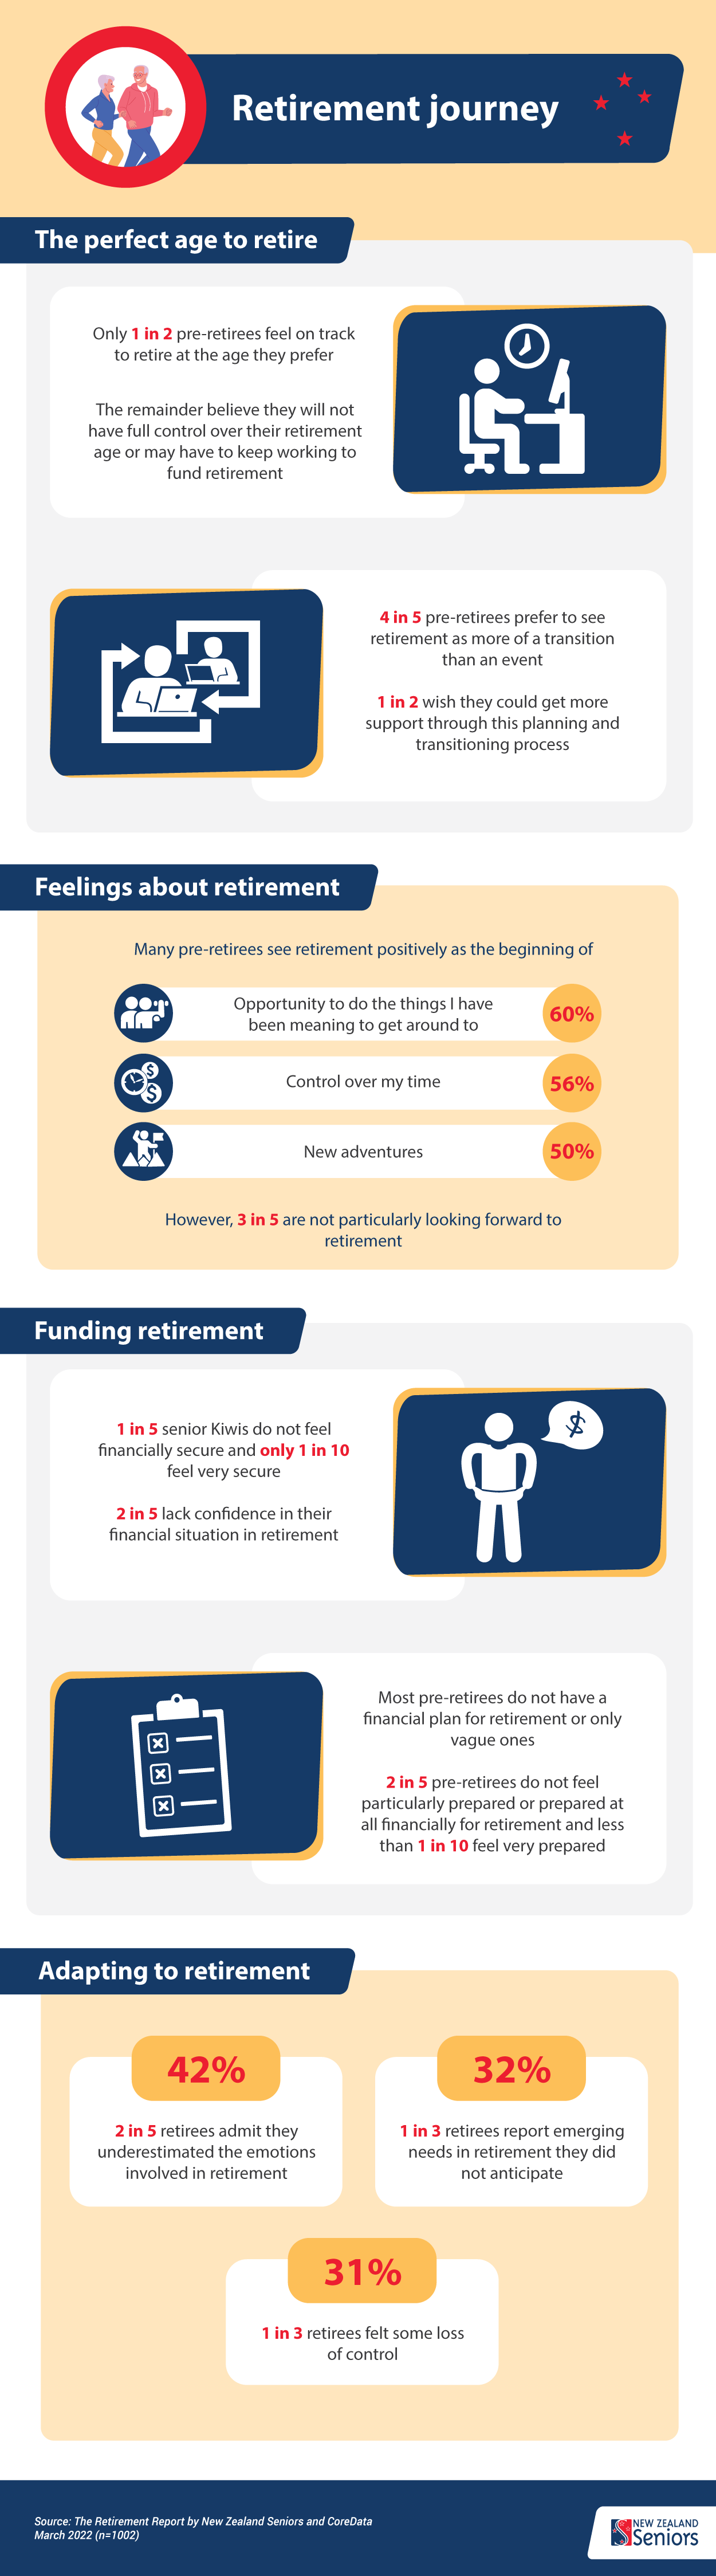 Image of retirement journey infographic